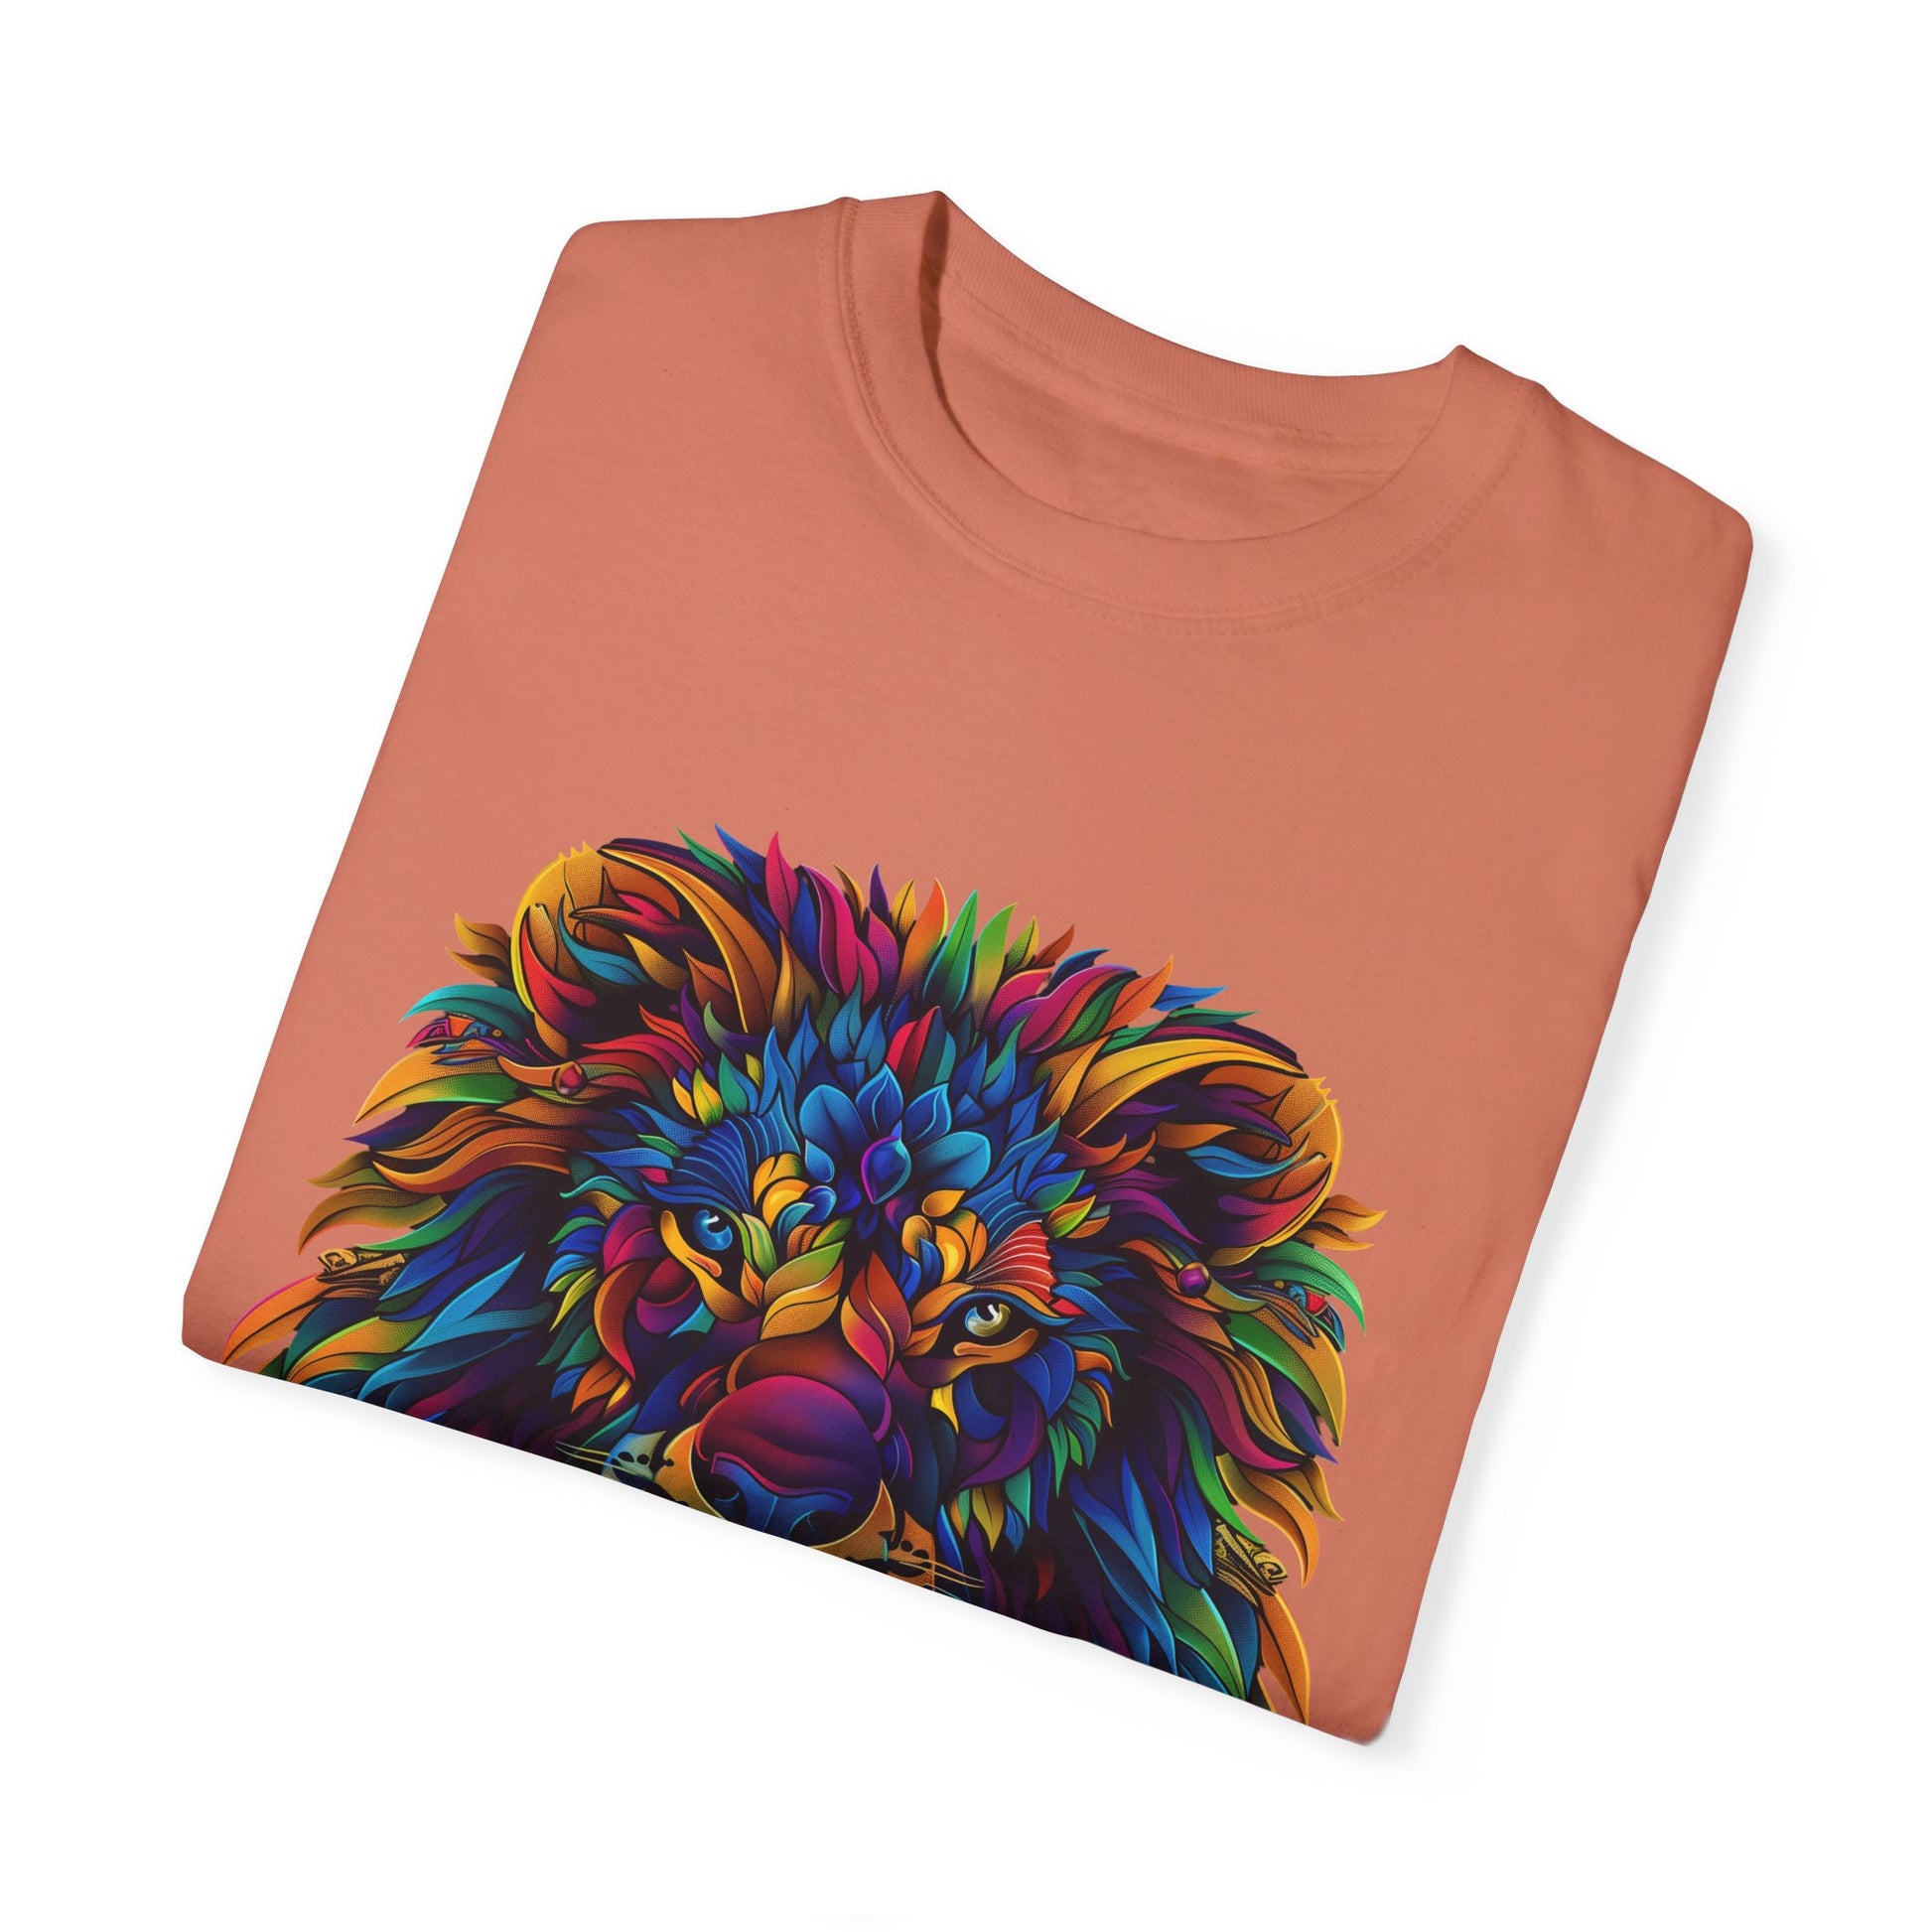 Lion Head Cool Graphic Design Novelty Unisex Garment-dyed T-shirt Cotton Funny Humorous Graphic Soft Premium Unisex Men Women Terracotta T-shirt Birthday Gift-56